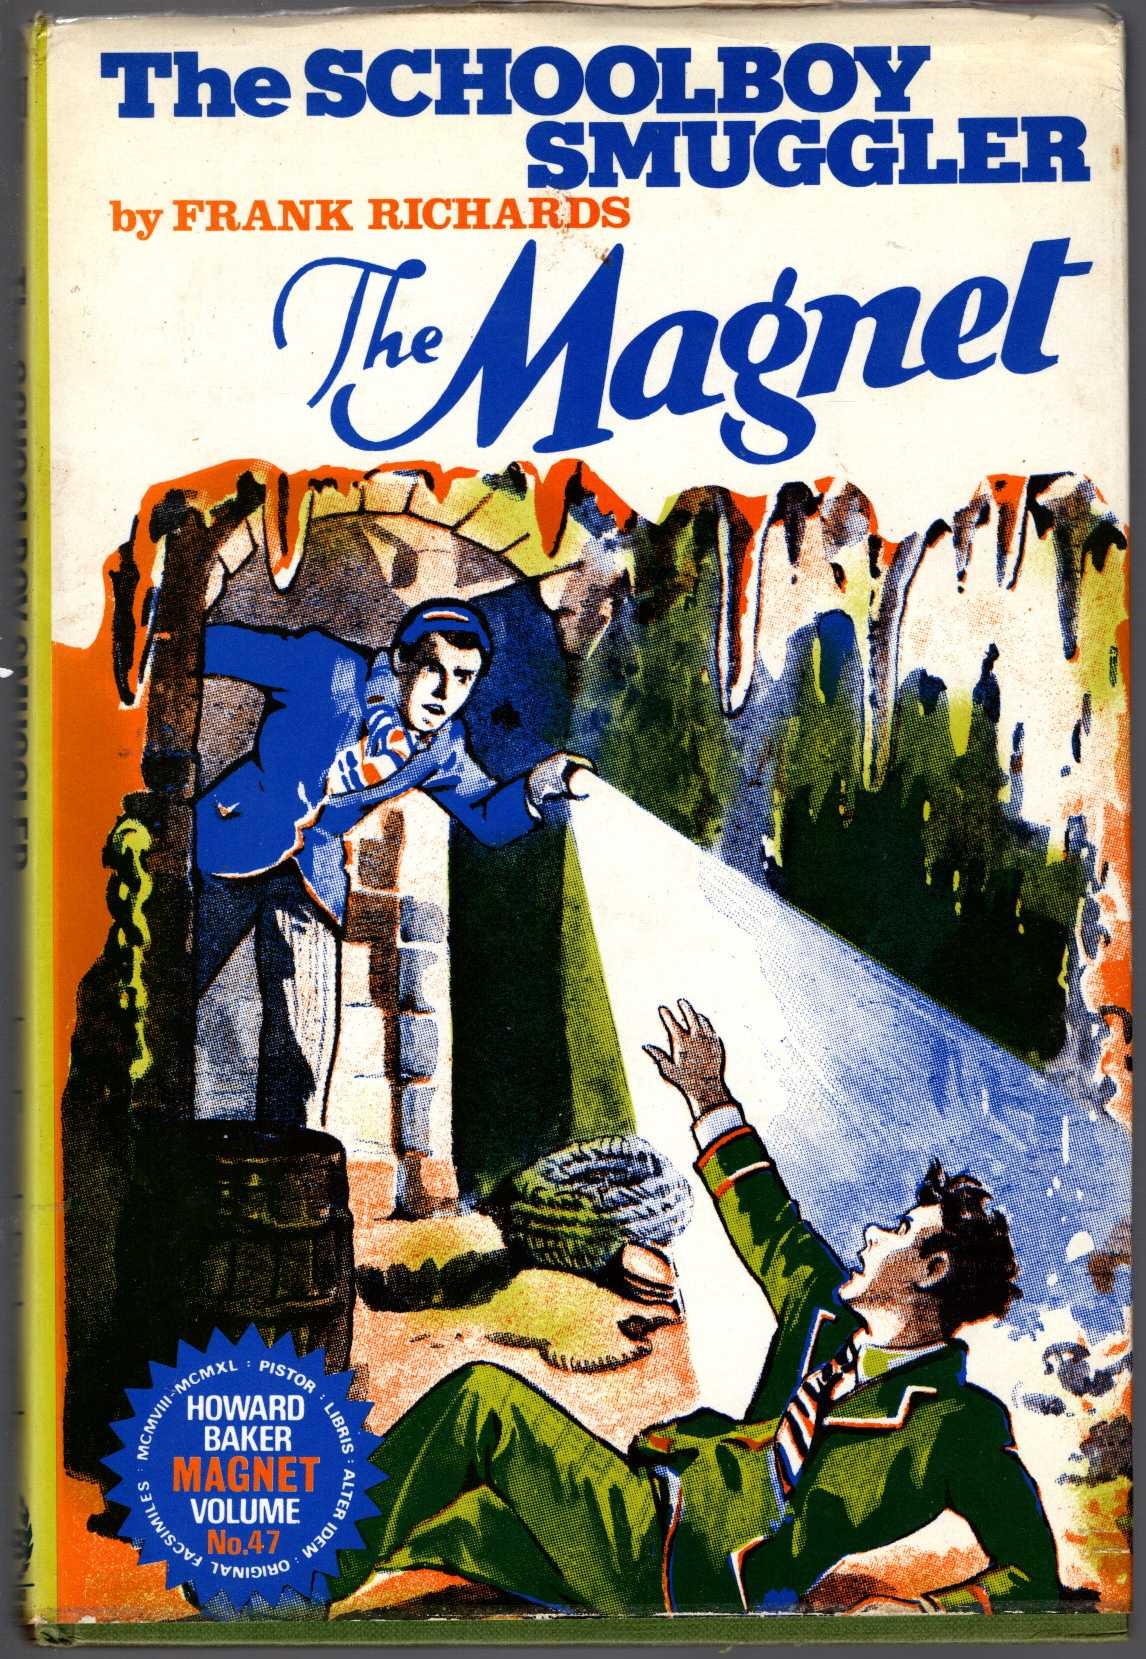 THE SCHHOLBOY SMUGGLER front book cover image